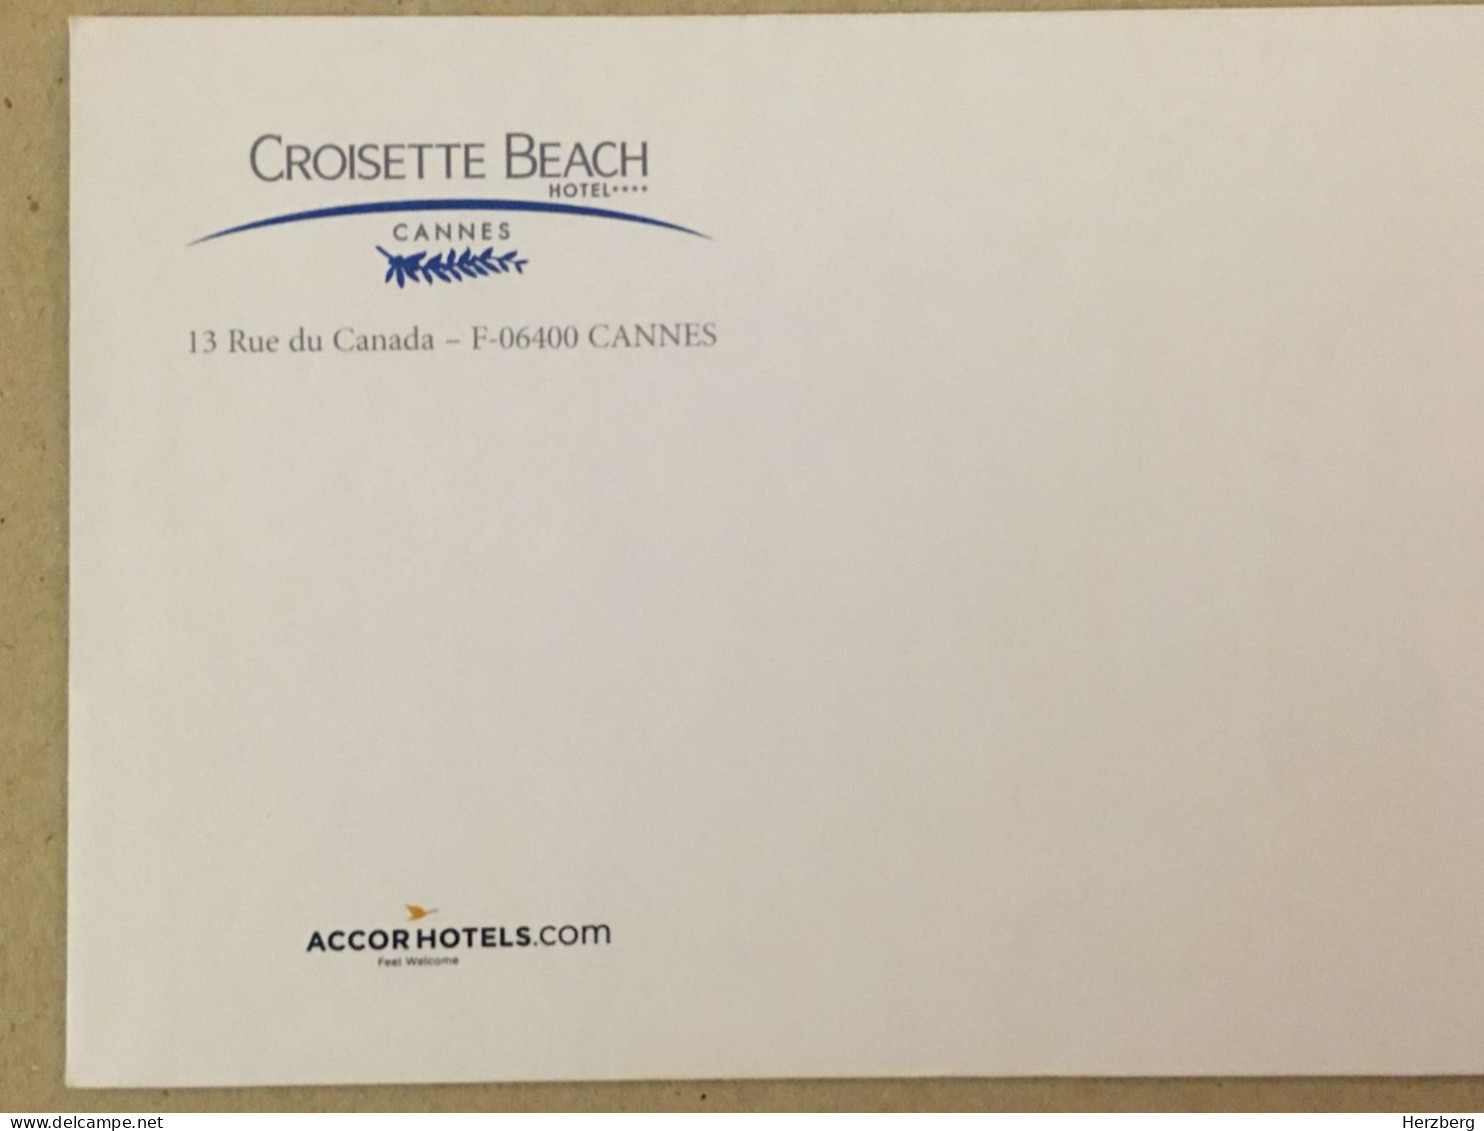 Cover Envelope - France Cannes Croisette Beach Rue Du Canada Hotel - Hostelería - Horesca